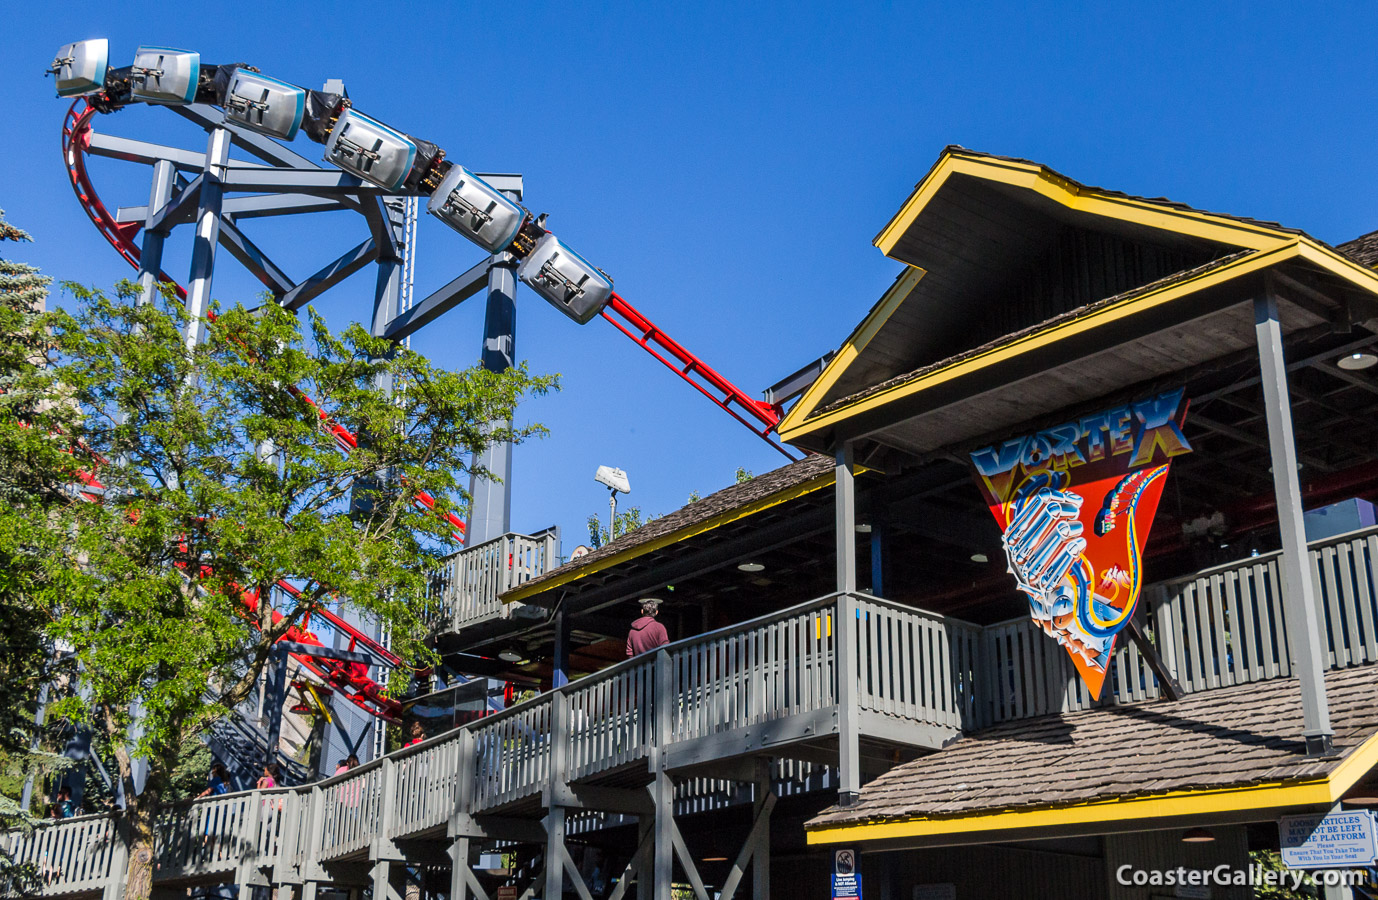 Turn on the Vortex suspended roller coaster